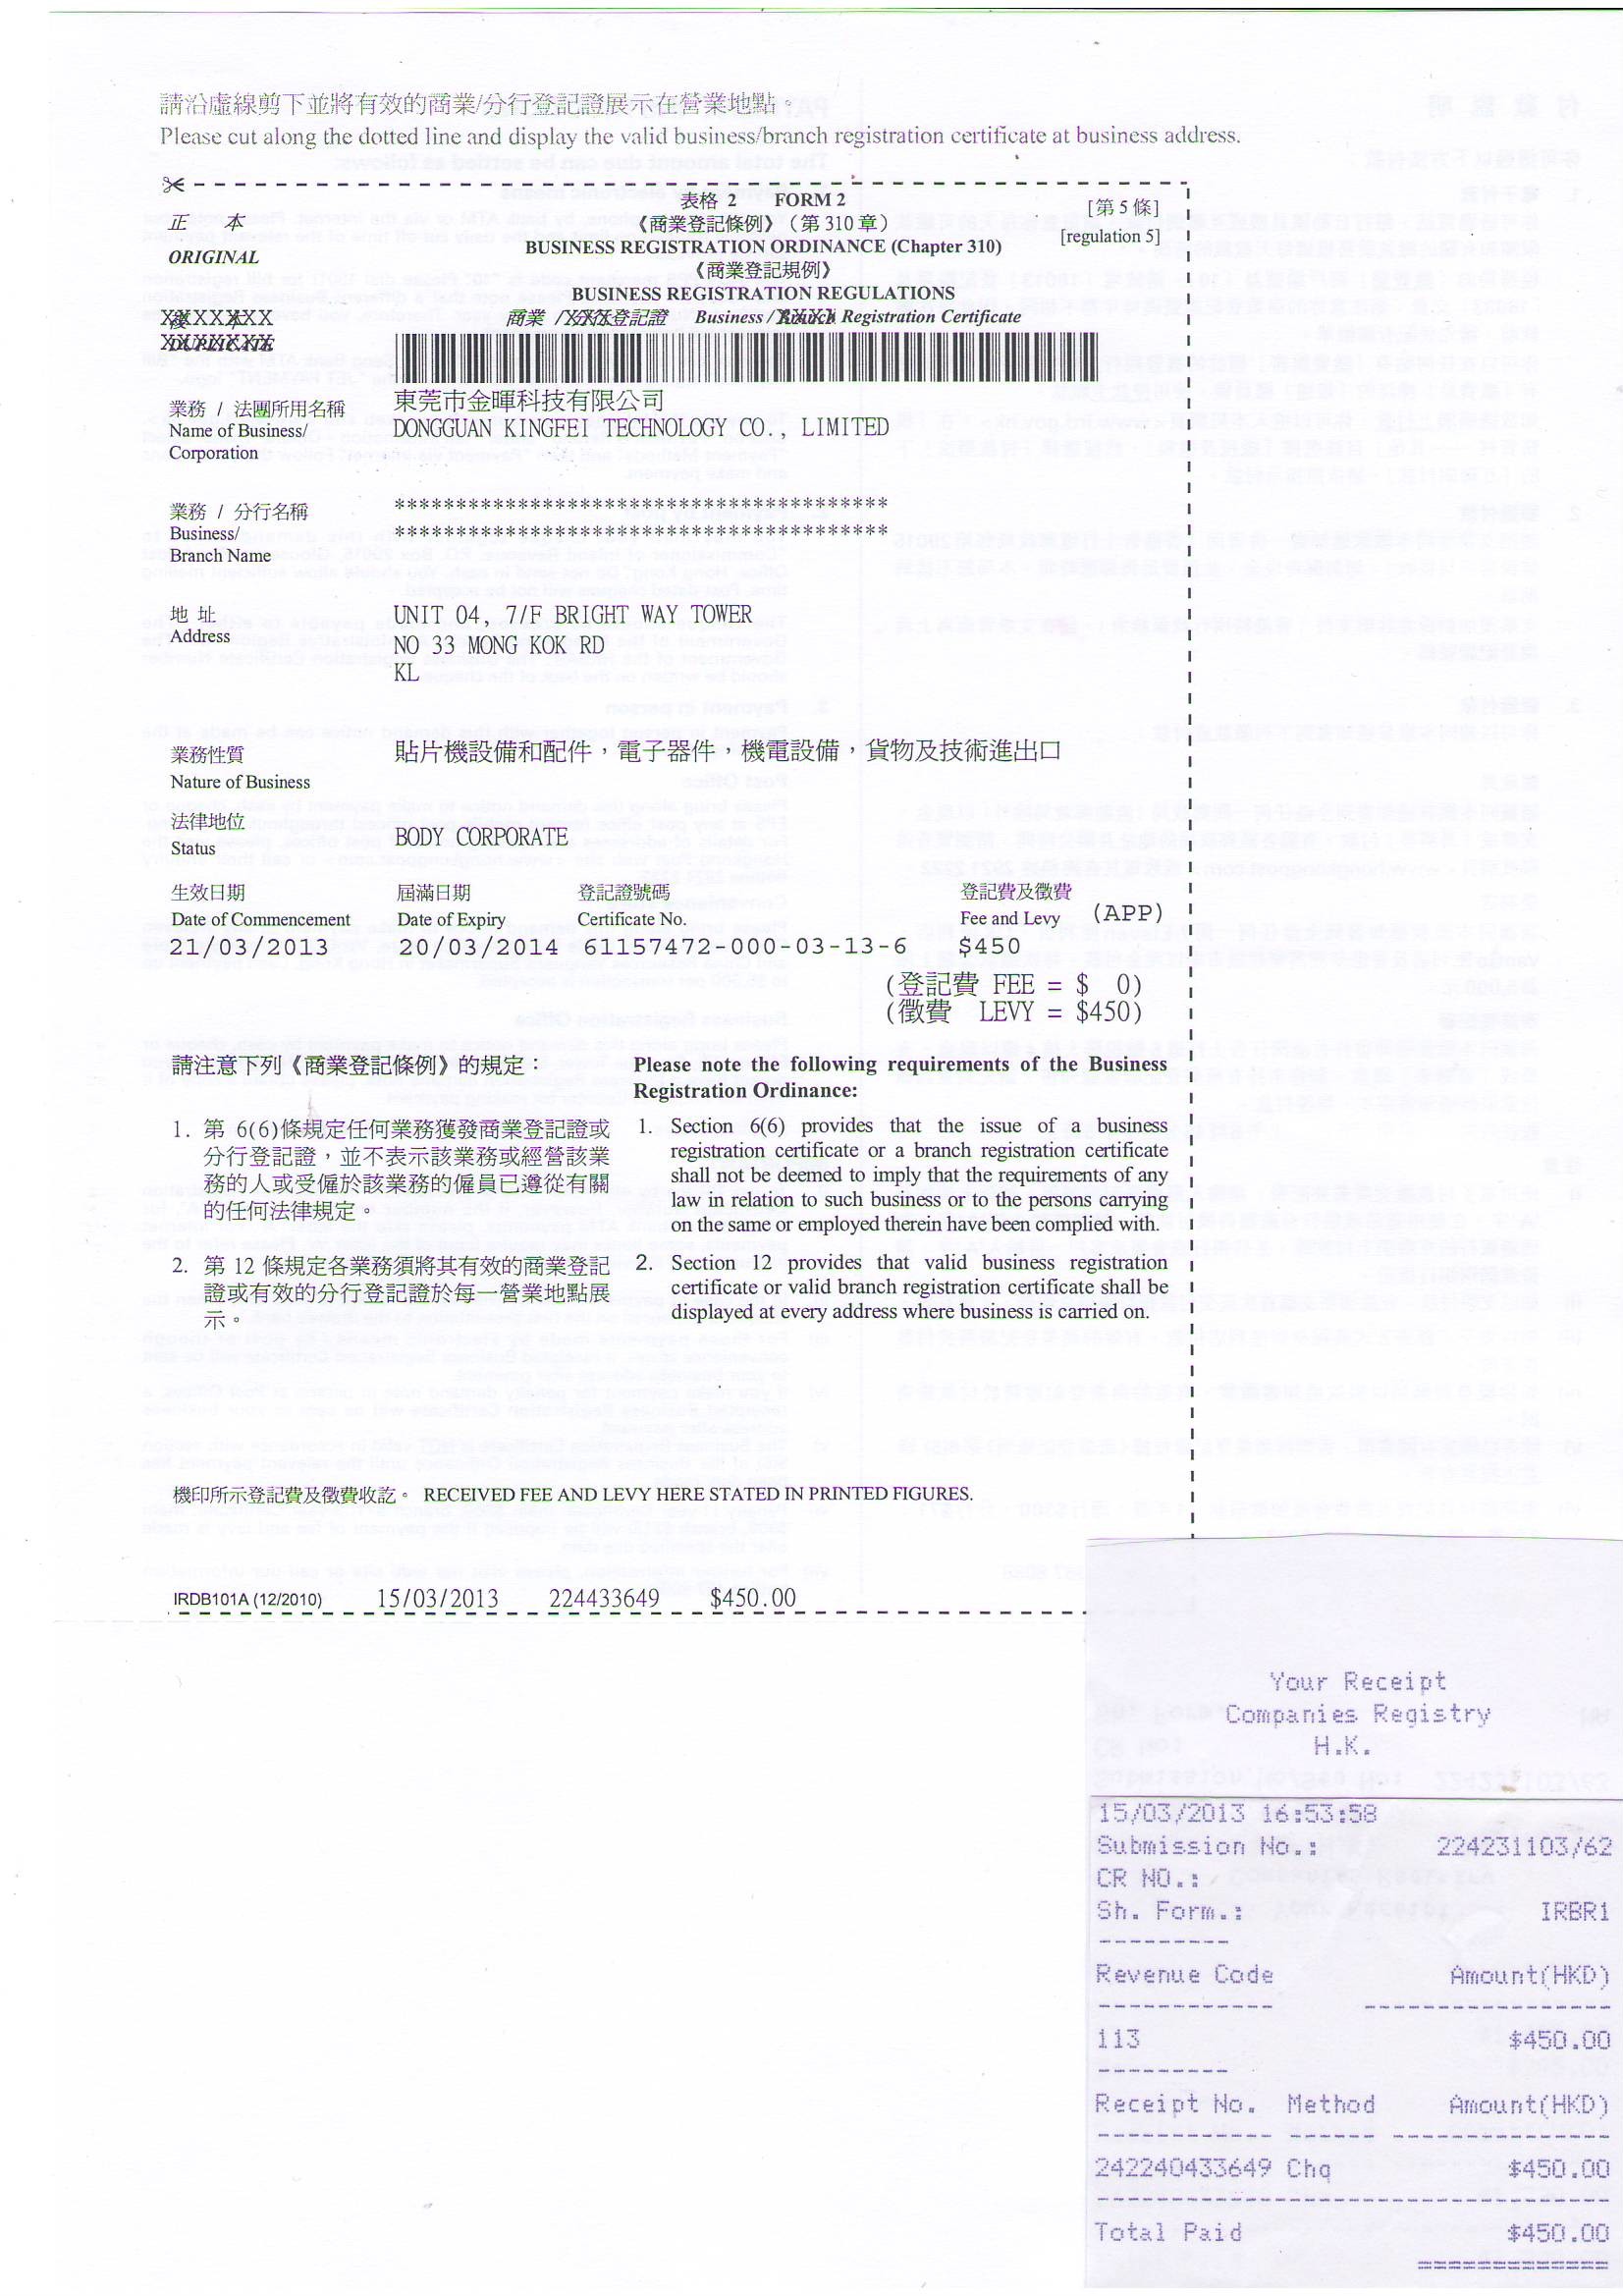 China Dongguan Kingfei Technology Co.,Limited Certification